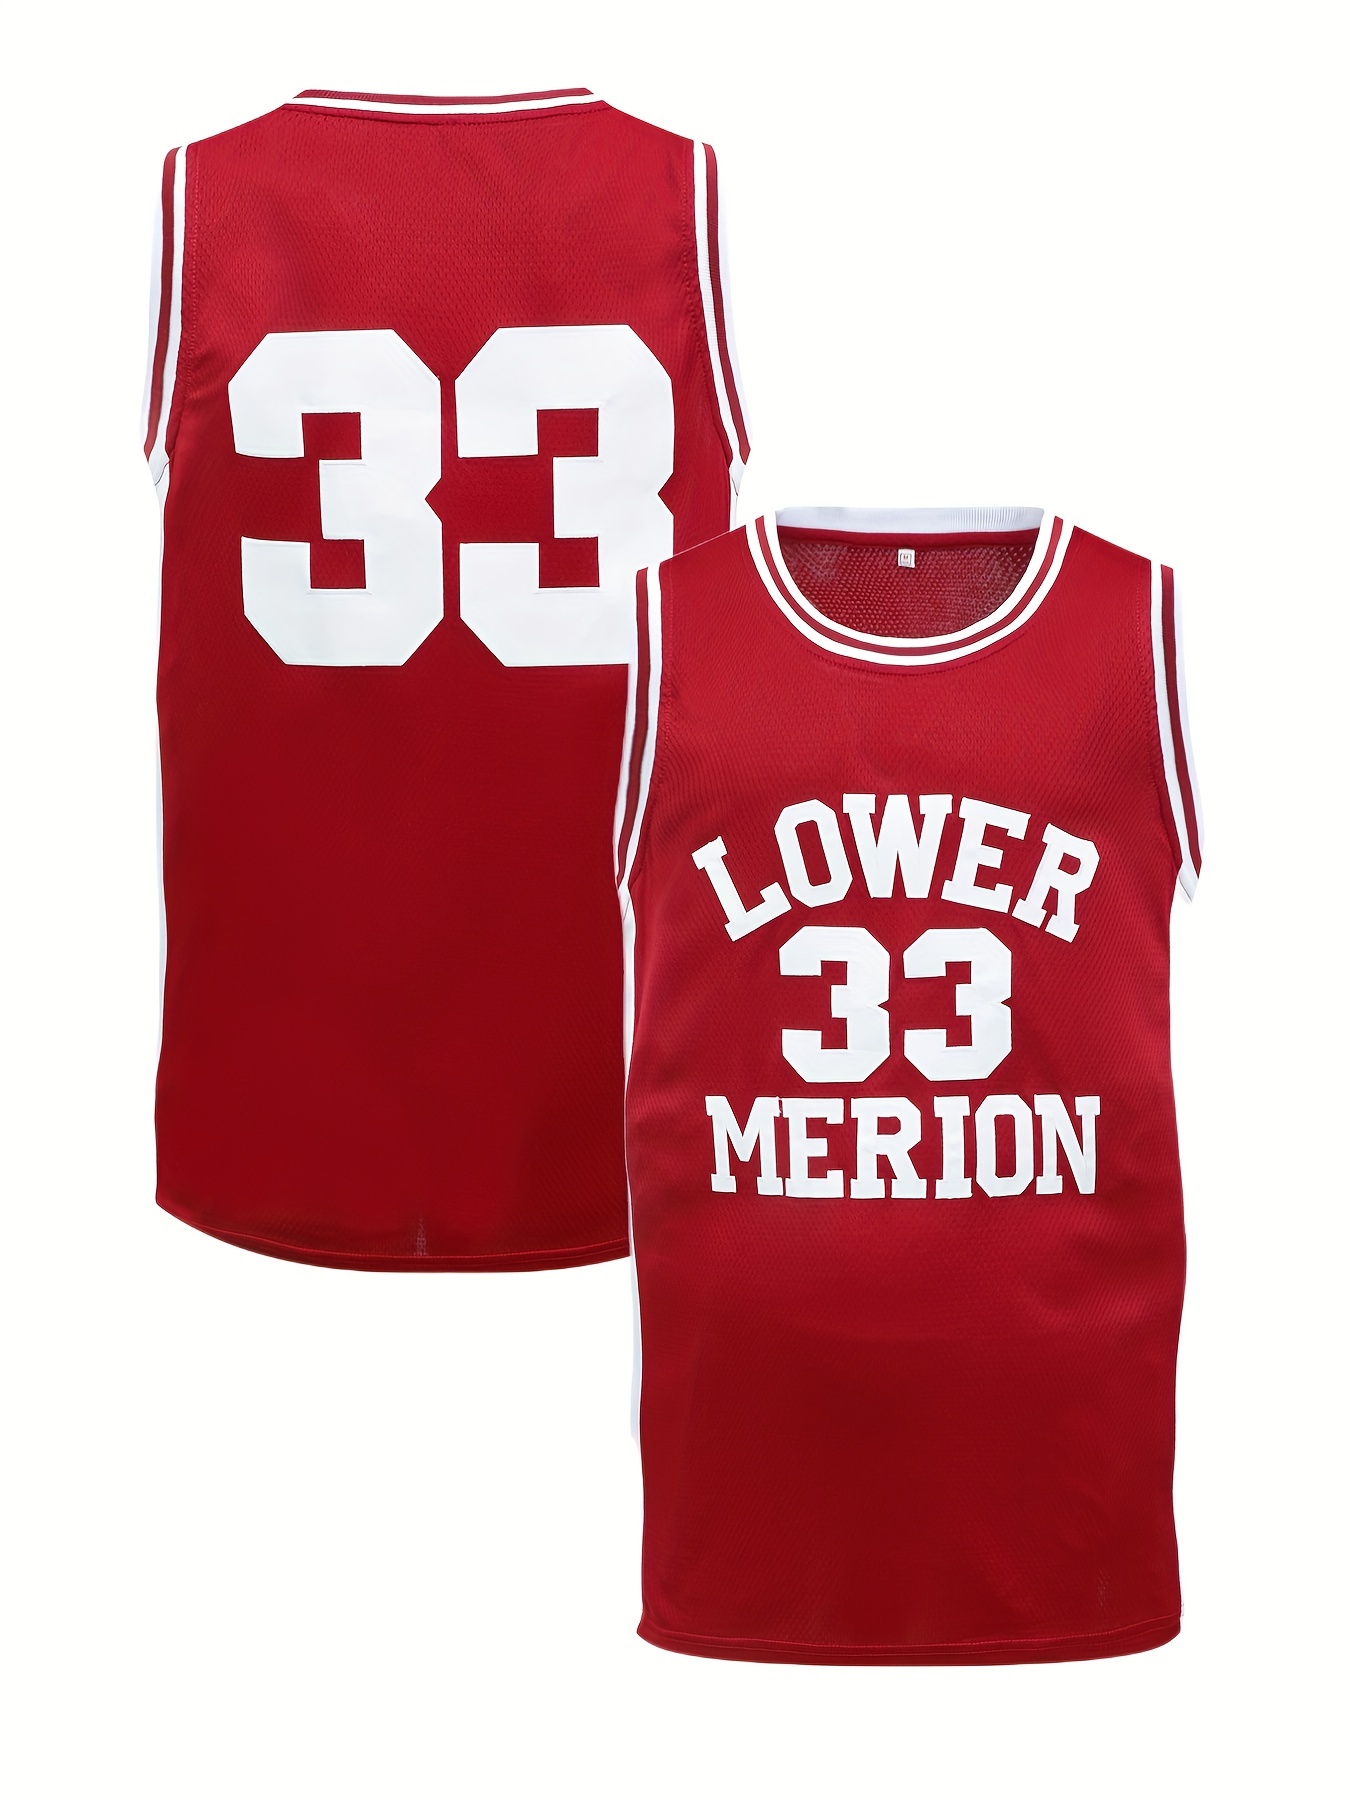 Kobe Bryant #33 Lower Merion Split Basketball Jersey.